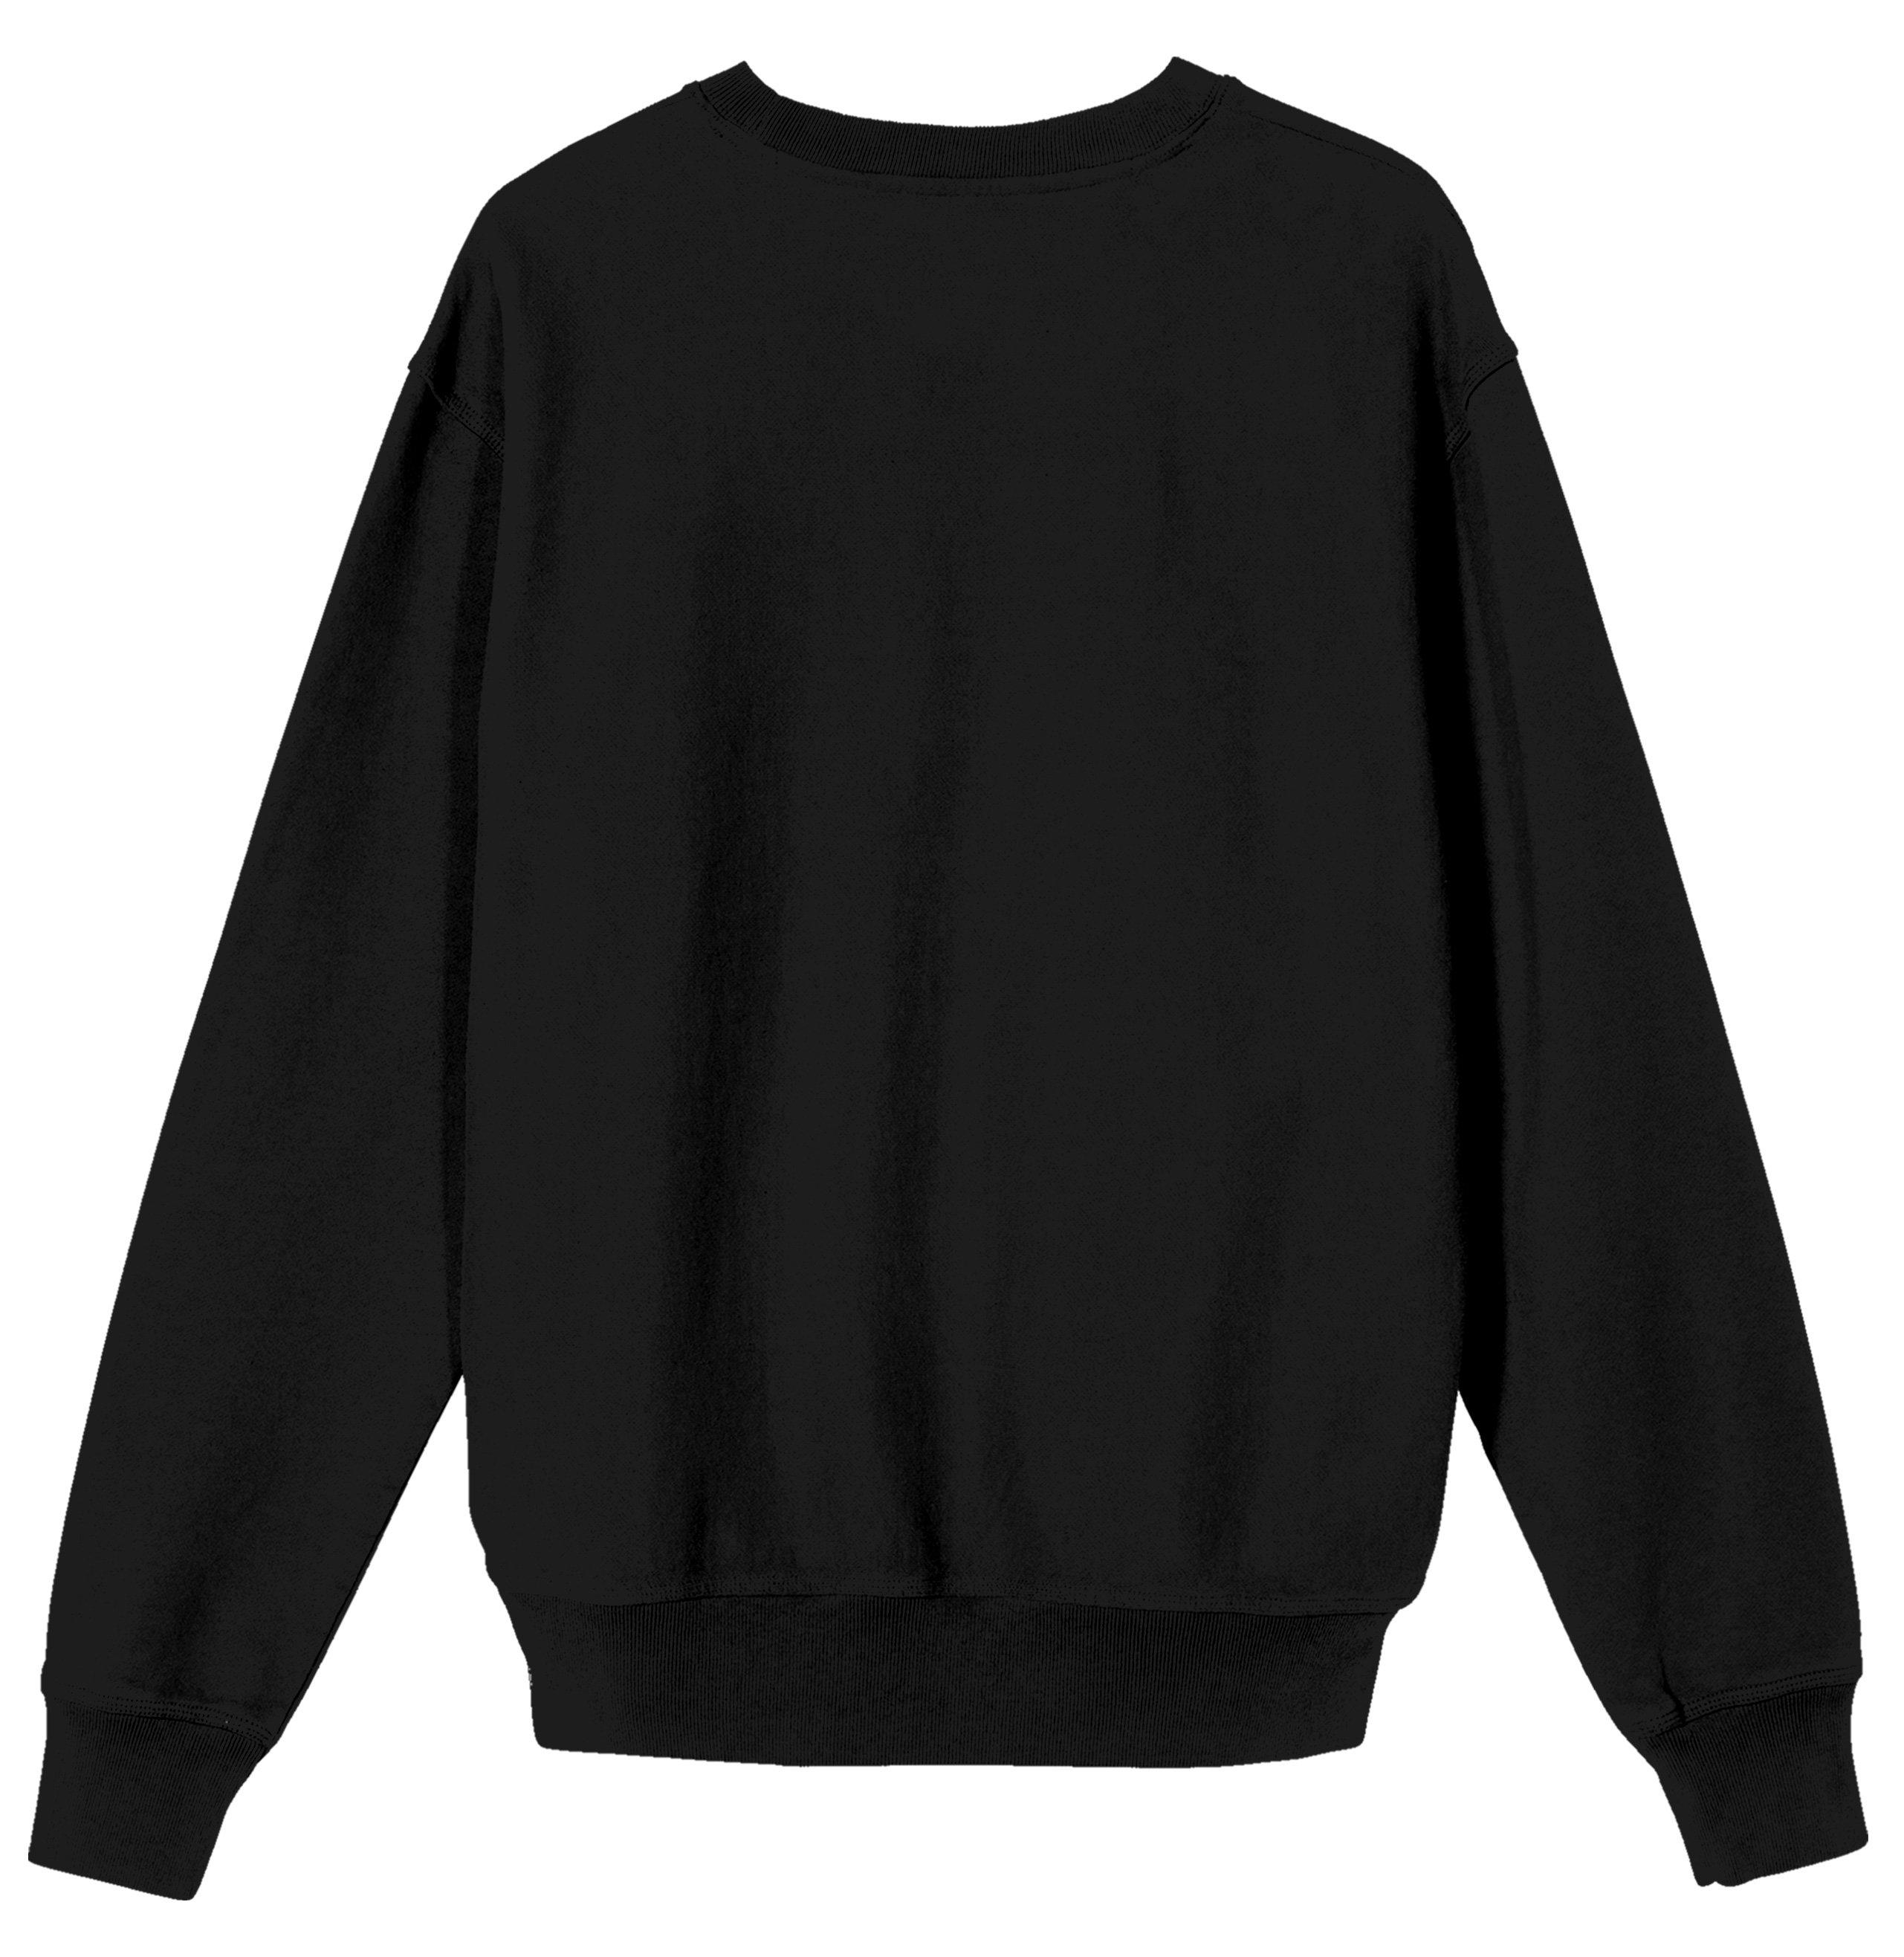 Kirby Vintage Character Logo Men's Black Graphic Long Sleeve Sweatshirt